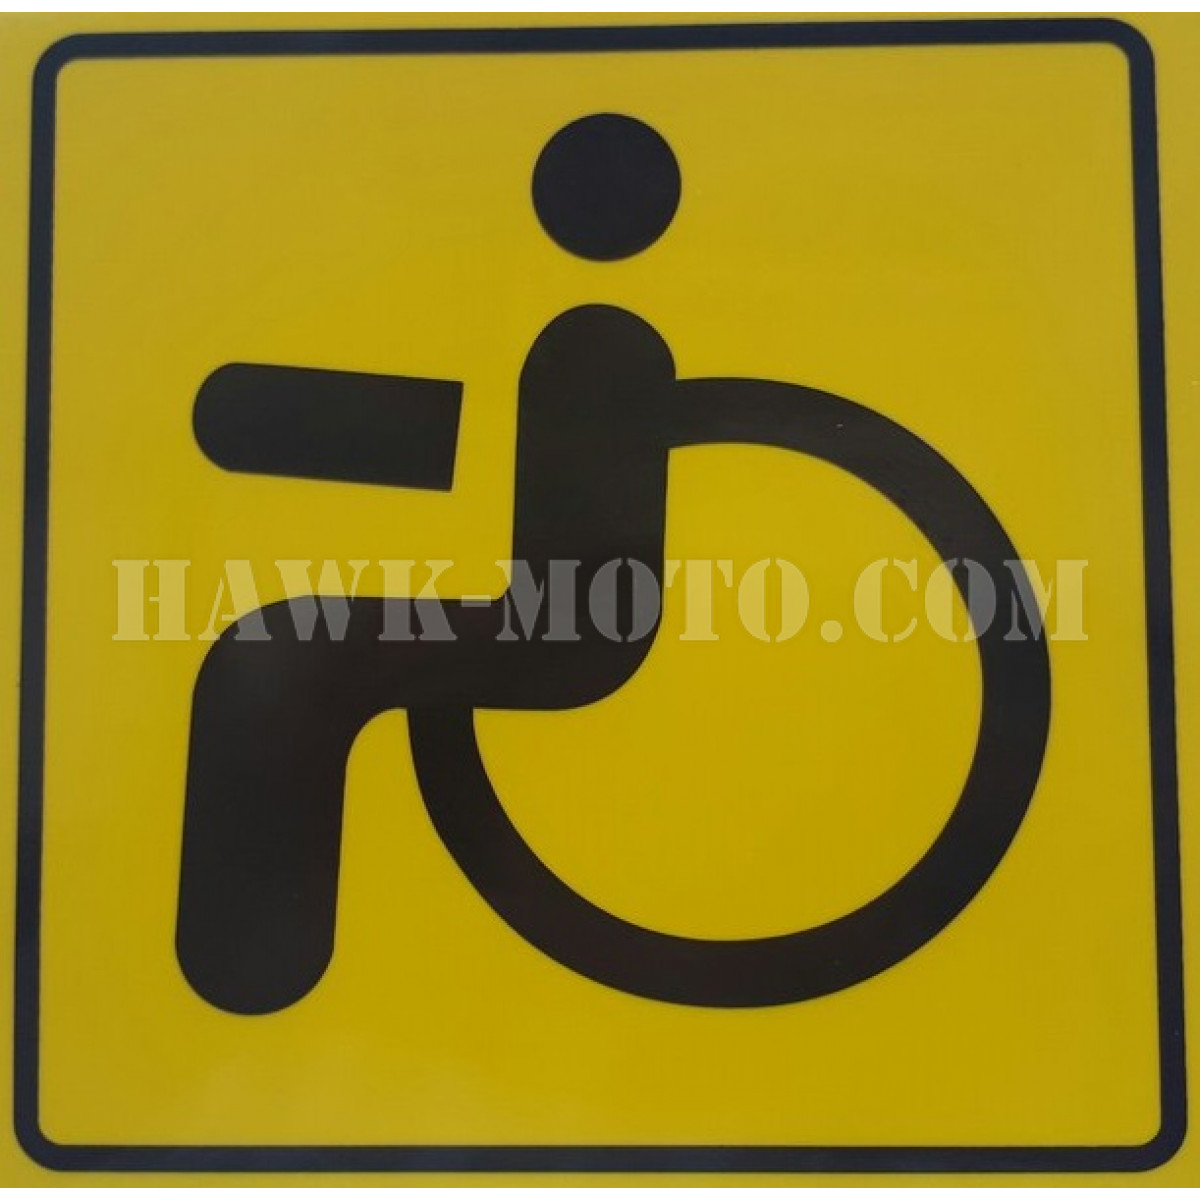 Новый знак инвалида на машину